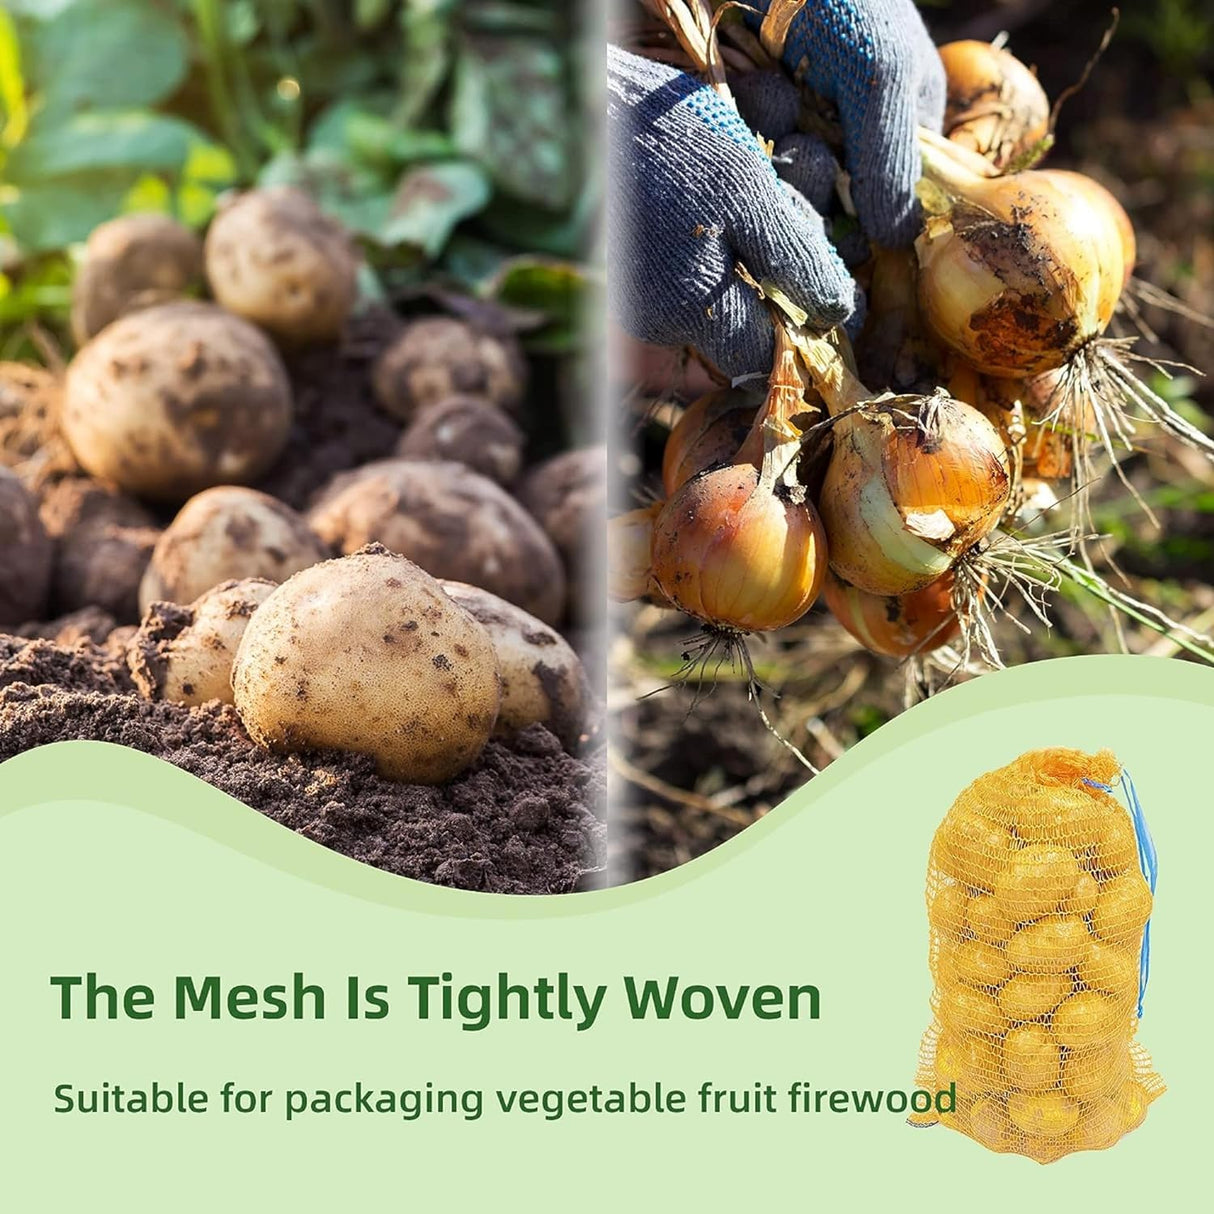 PP mesh Bag 16x24 inch for Great Vegetables - Singhal Mart